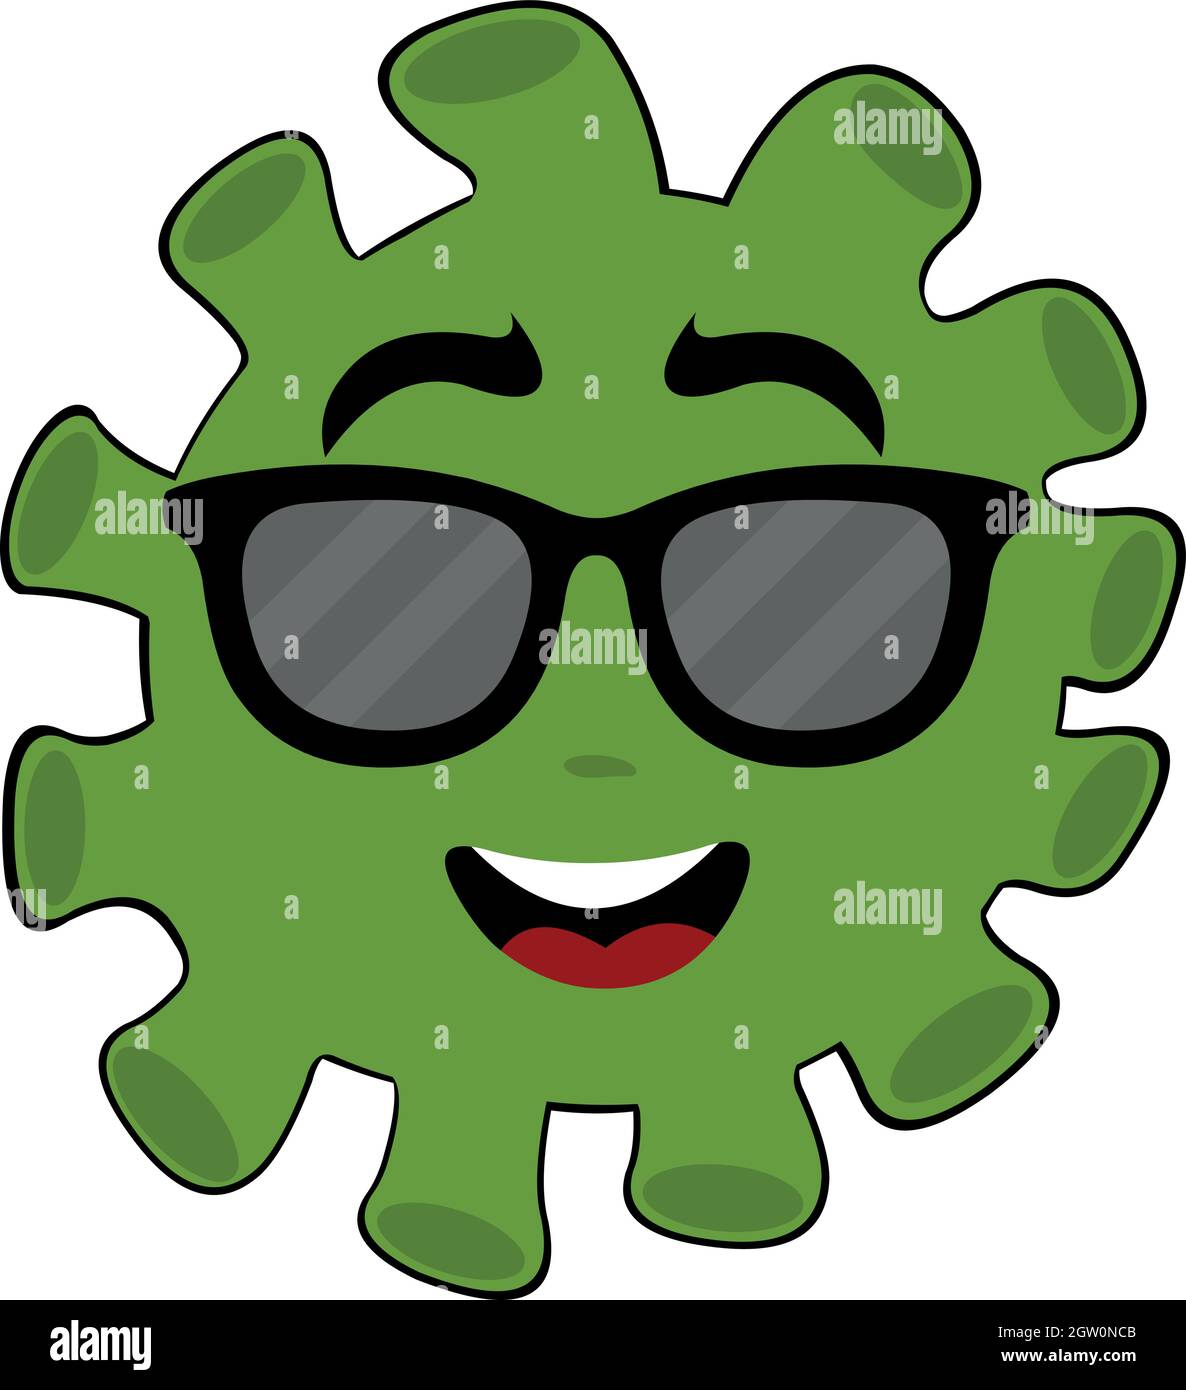 Vector illustration of cartoon bacteria, virus or microbe emoticon with sunglasses Stock Vector